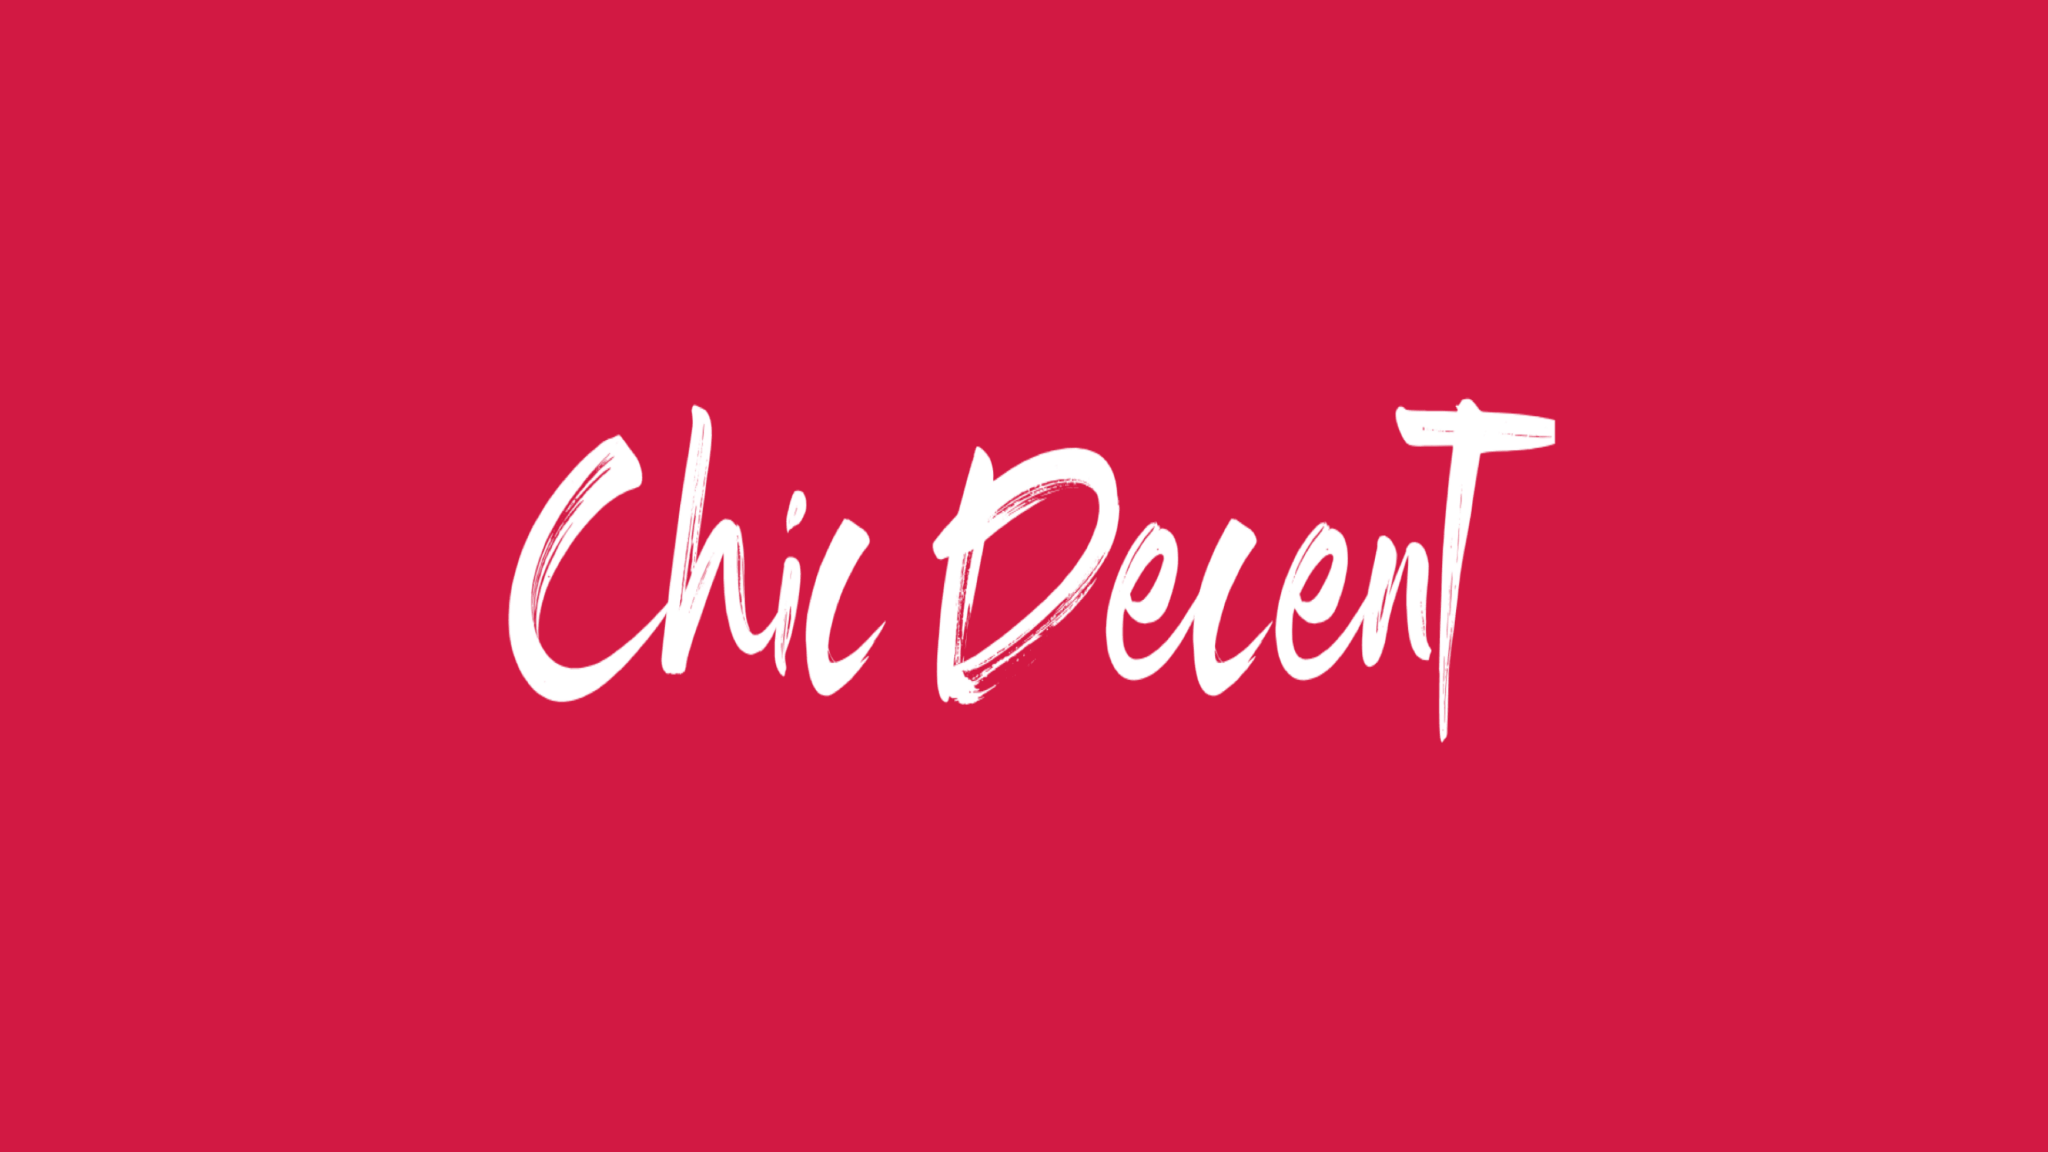 CHIC DECENT - Chic Decent